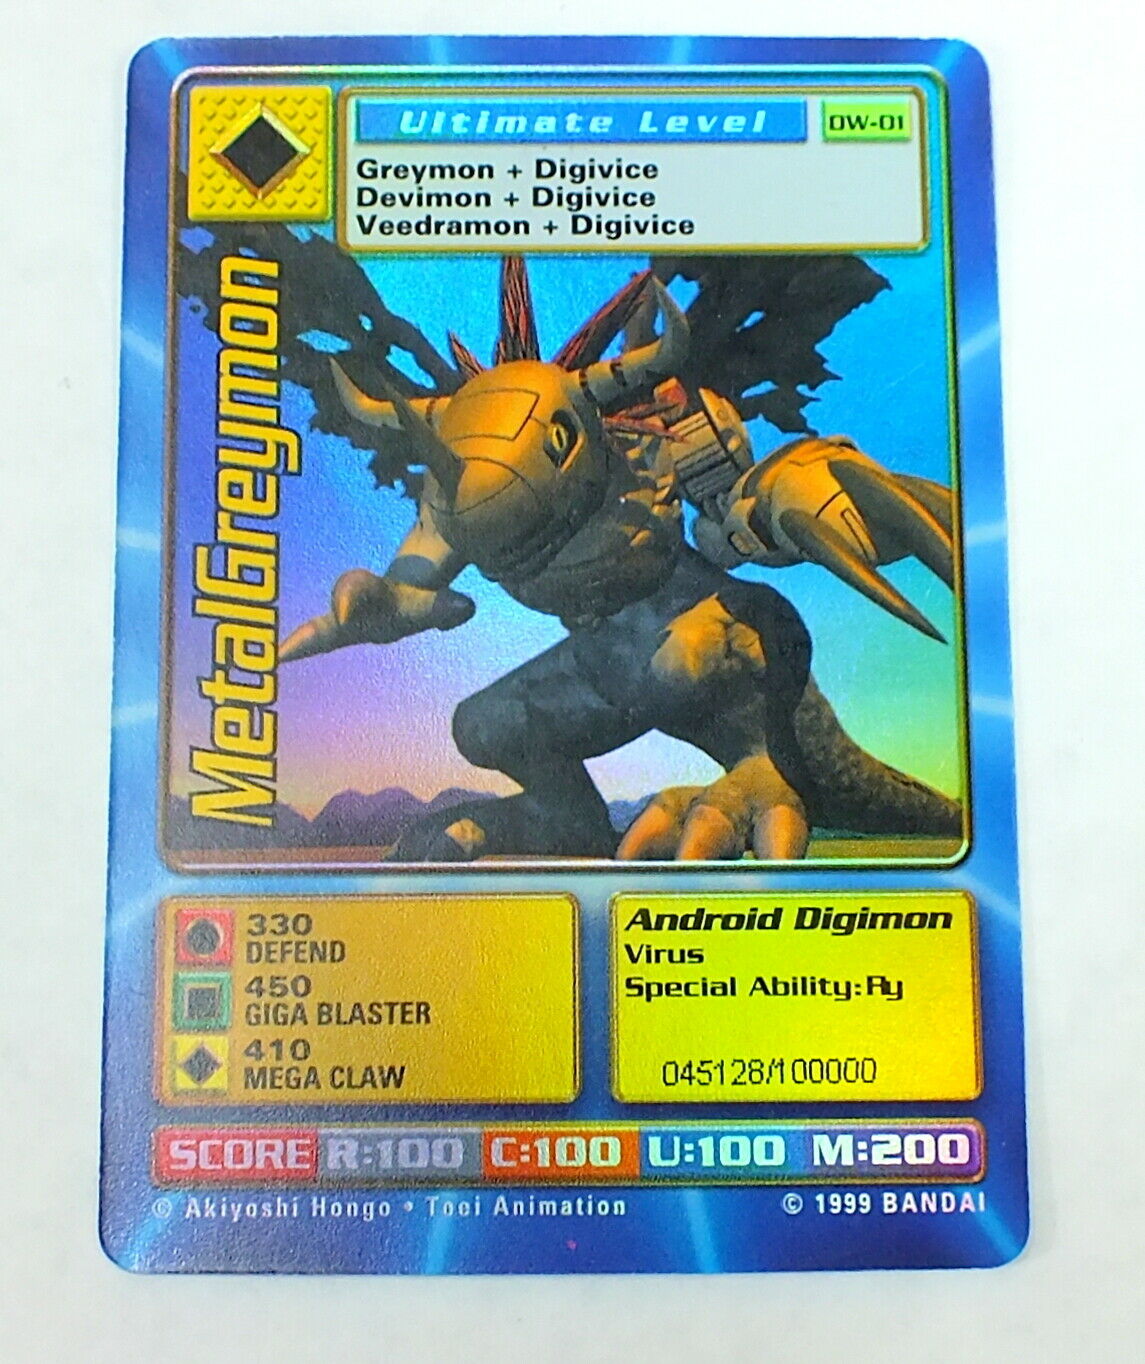 Digimon World PlayStation Promo DW-01 MetalGreymon - number 045128 / 100,000